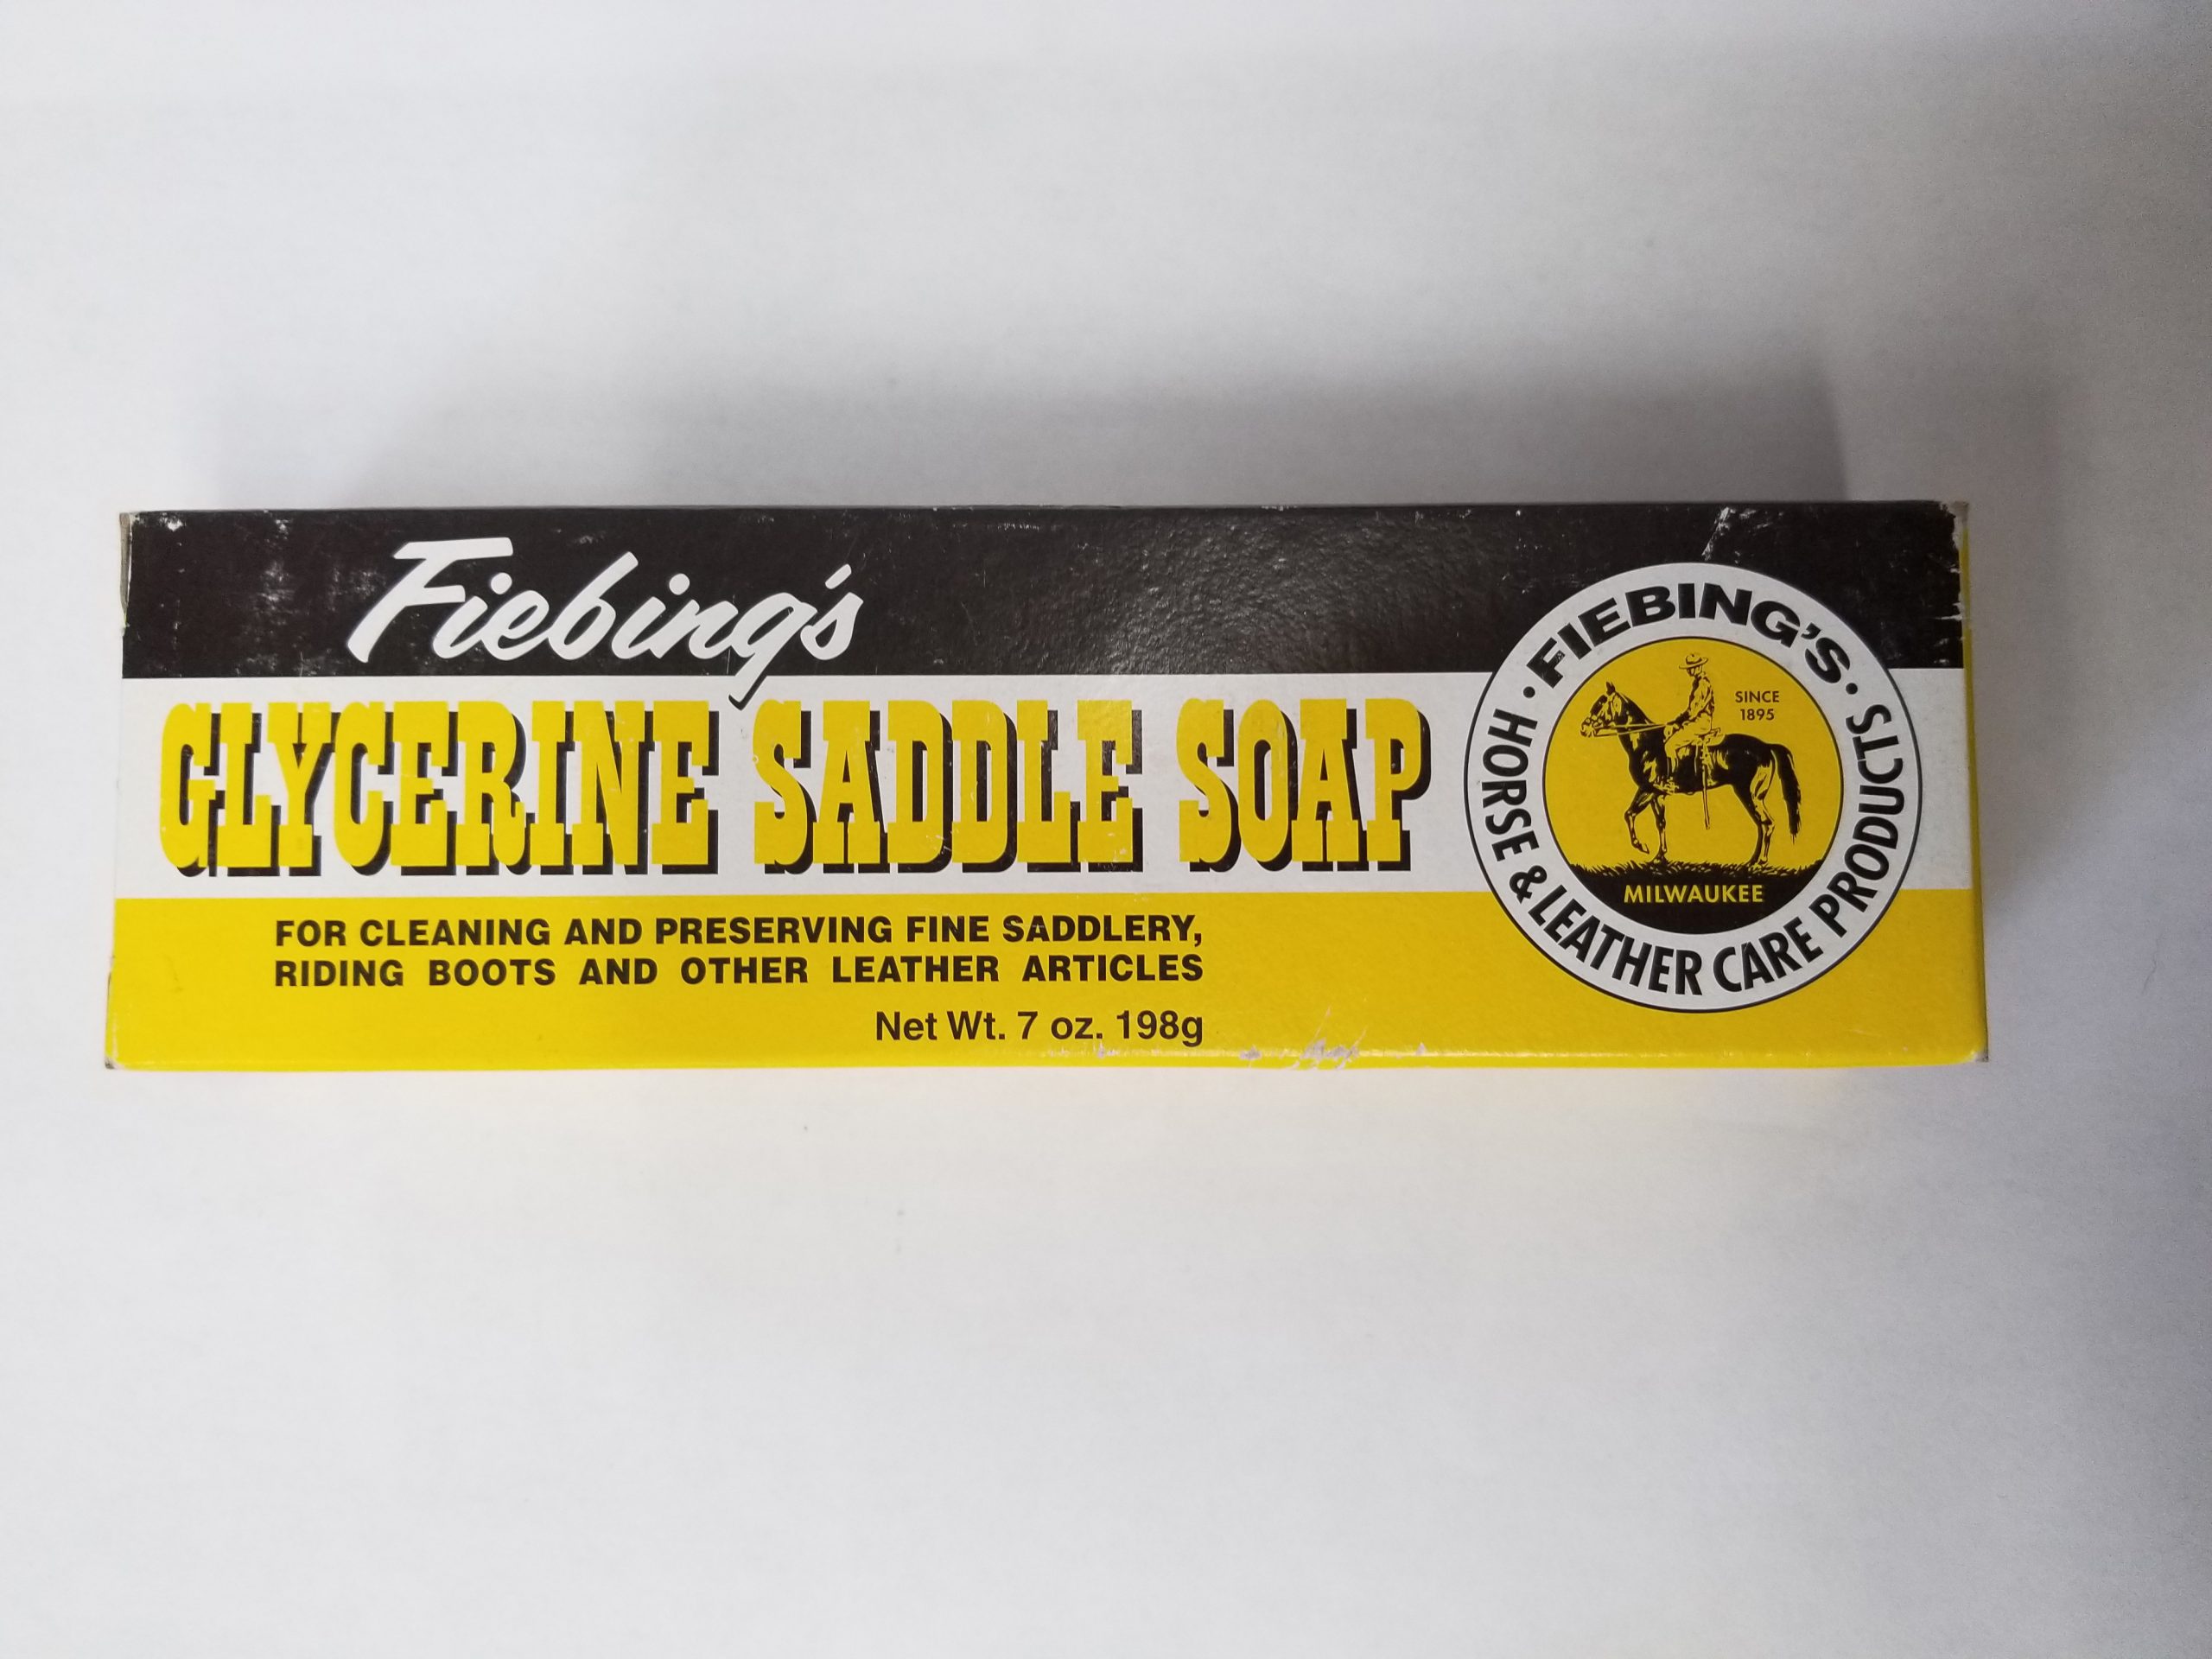 Fiebing's Glycerine Saddle Soap